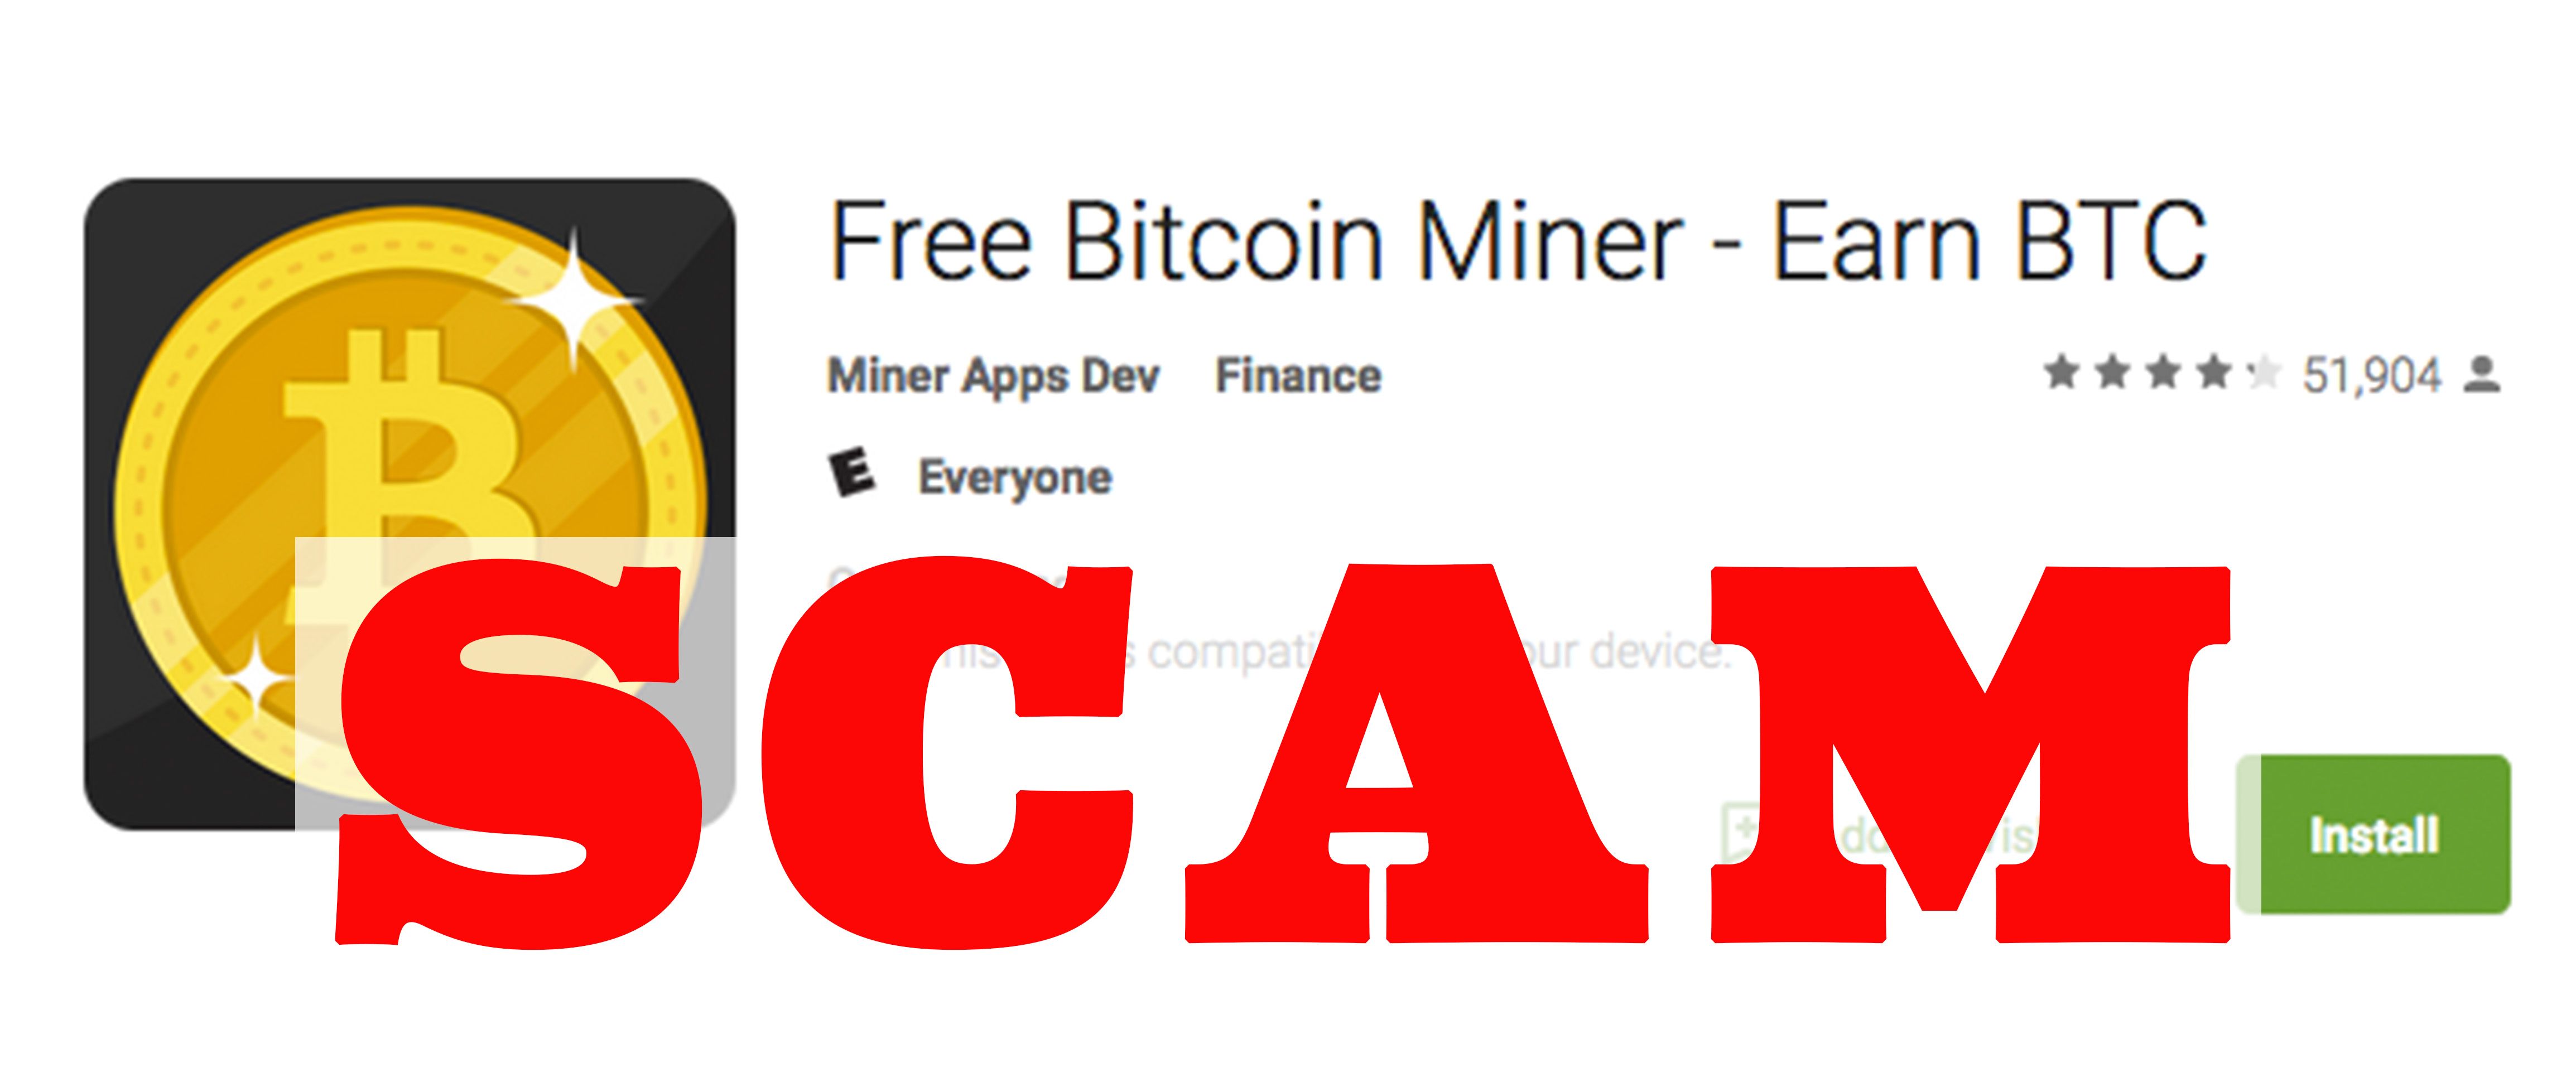 free bitcoin mining app legit